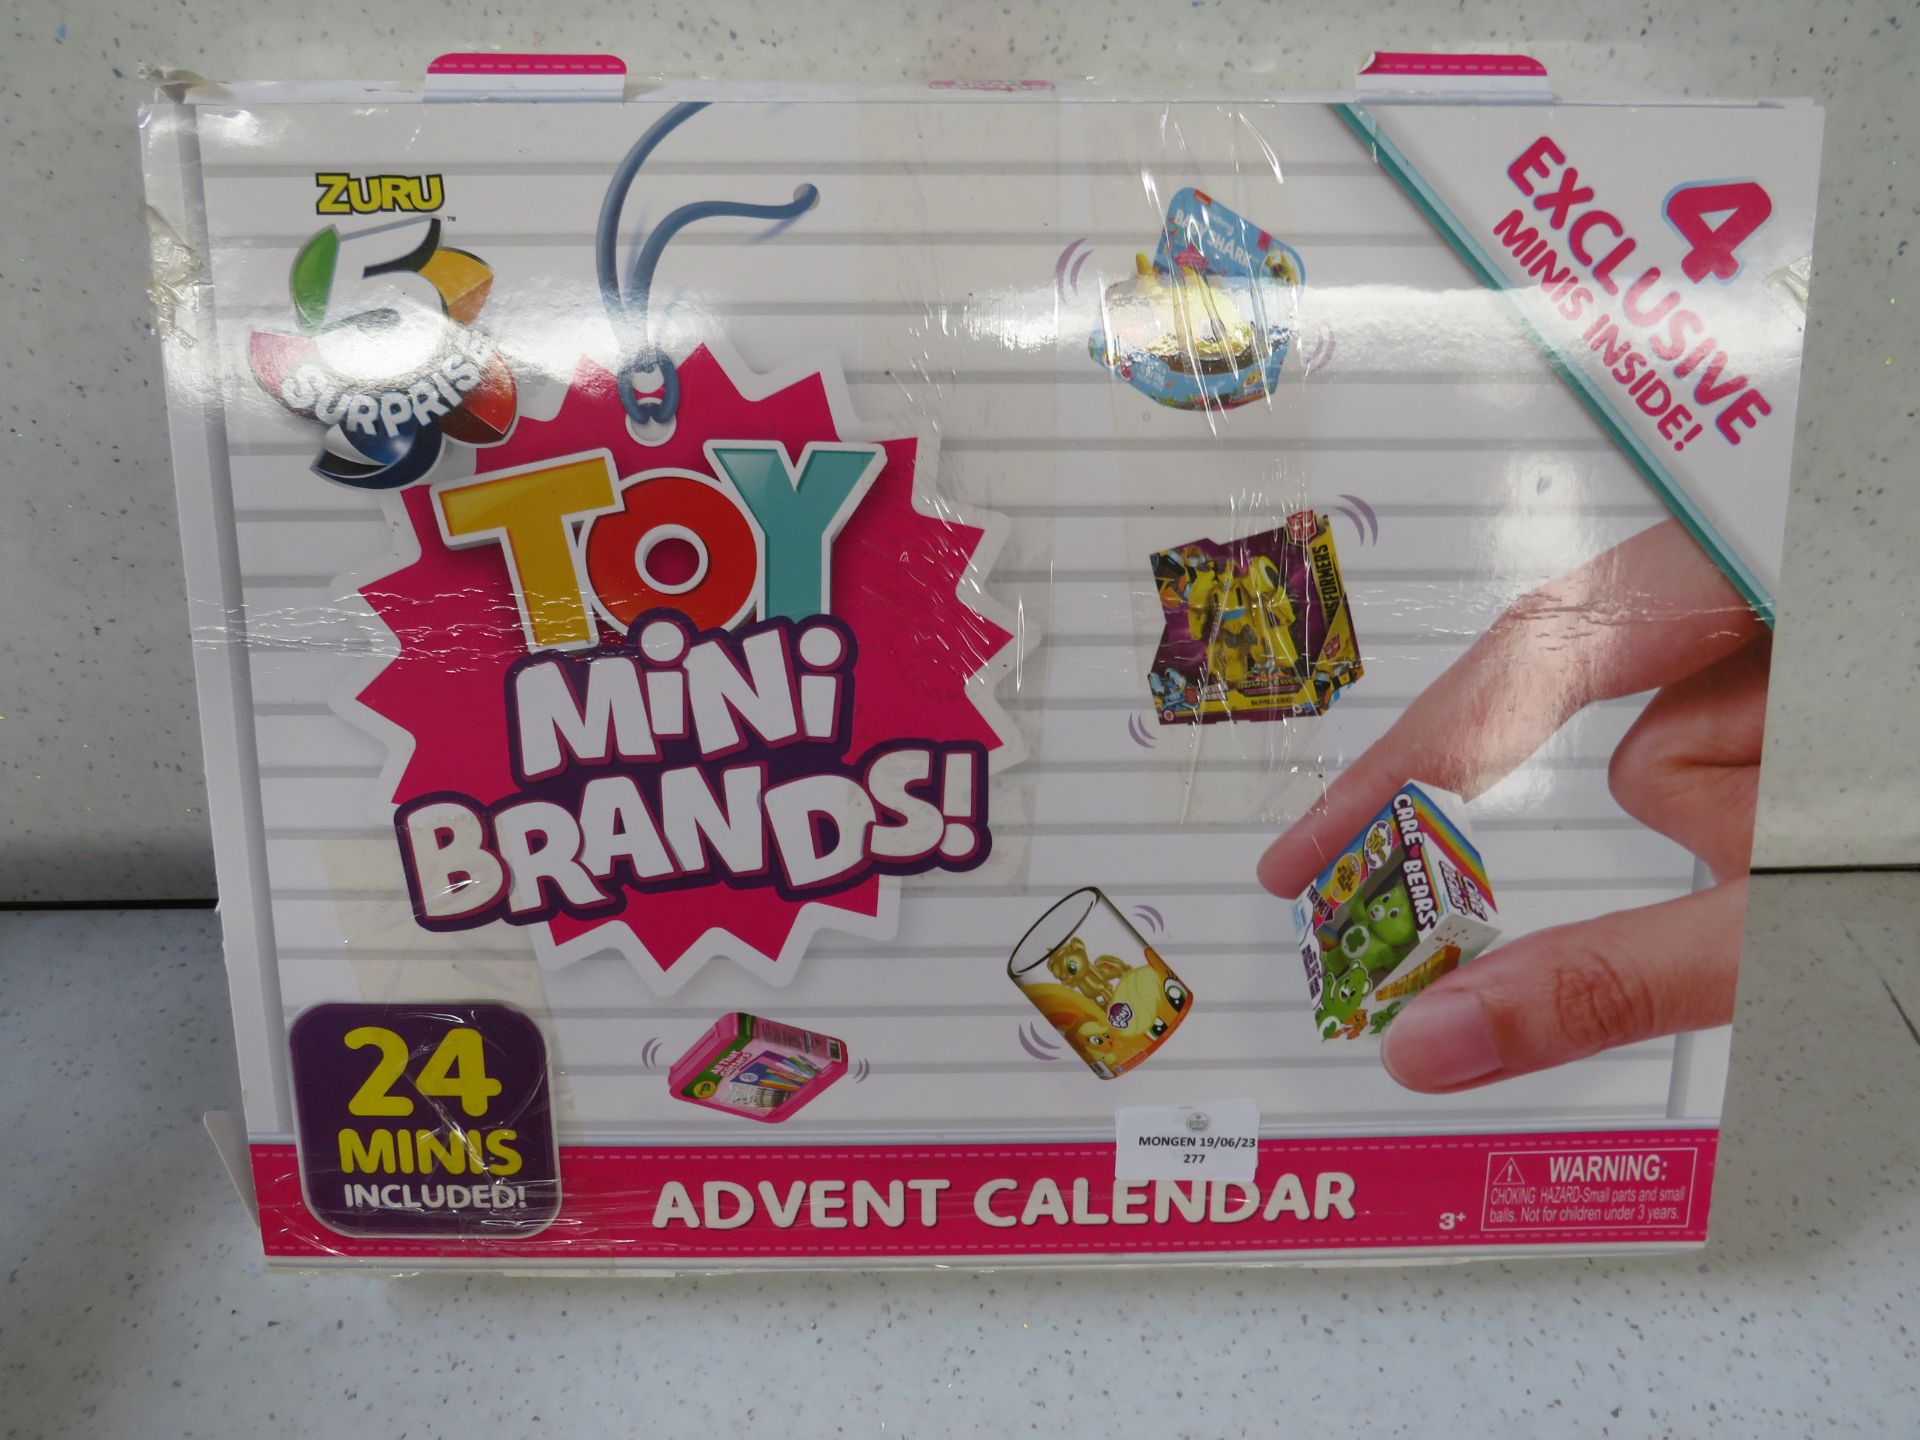 Zuru 5 Surprise - Toy Mini Brands Advent Calendar - Unchecked, Box Damaged.